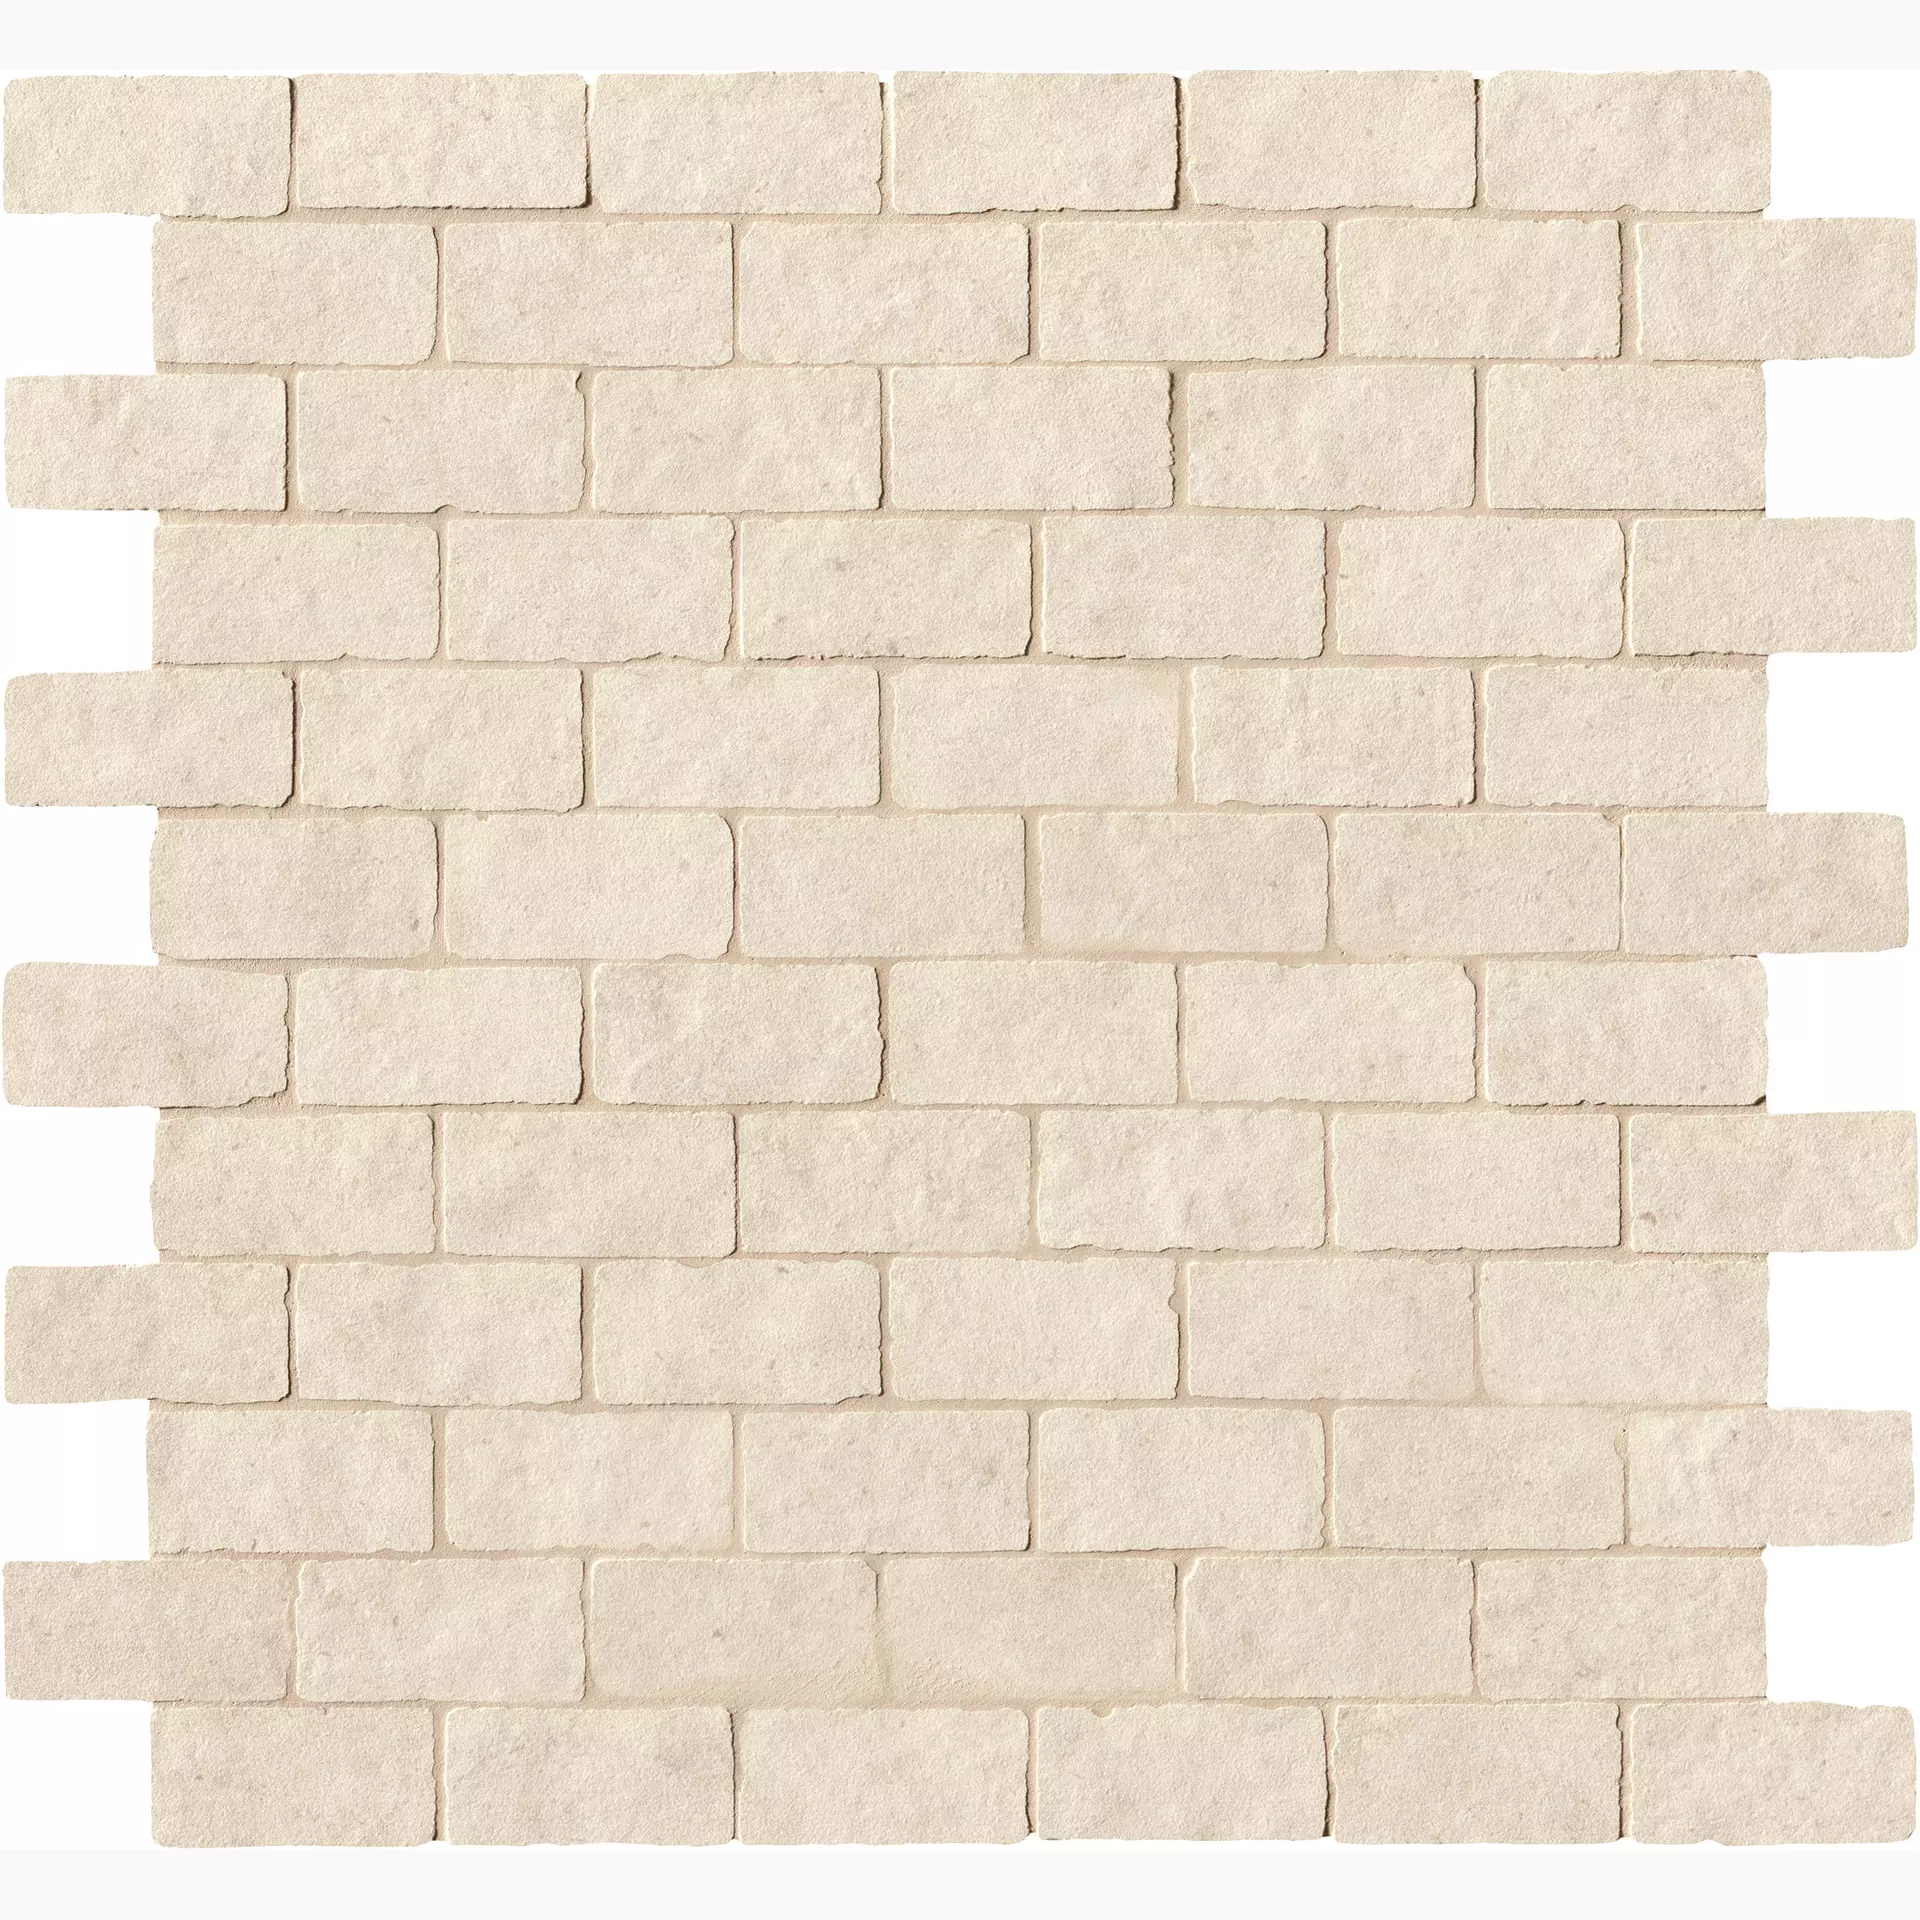 FAP Lumina Stone Beige Anticato Beige fOMJ antiquiert 30,5x30,5cm Macromosaico Brick